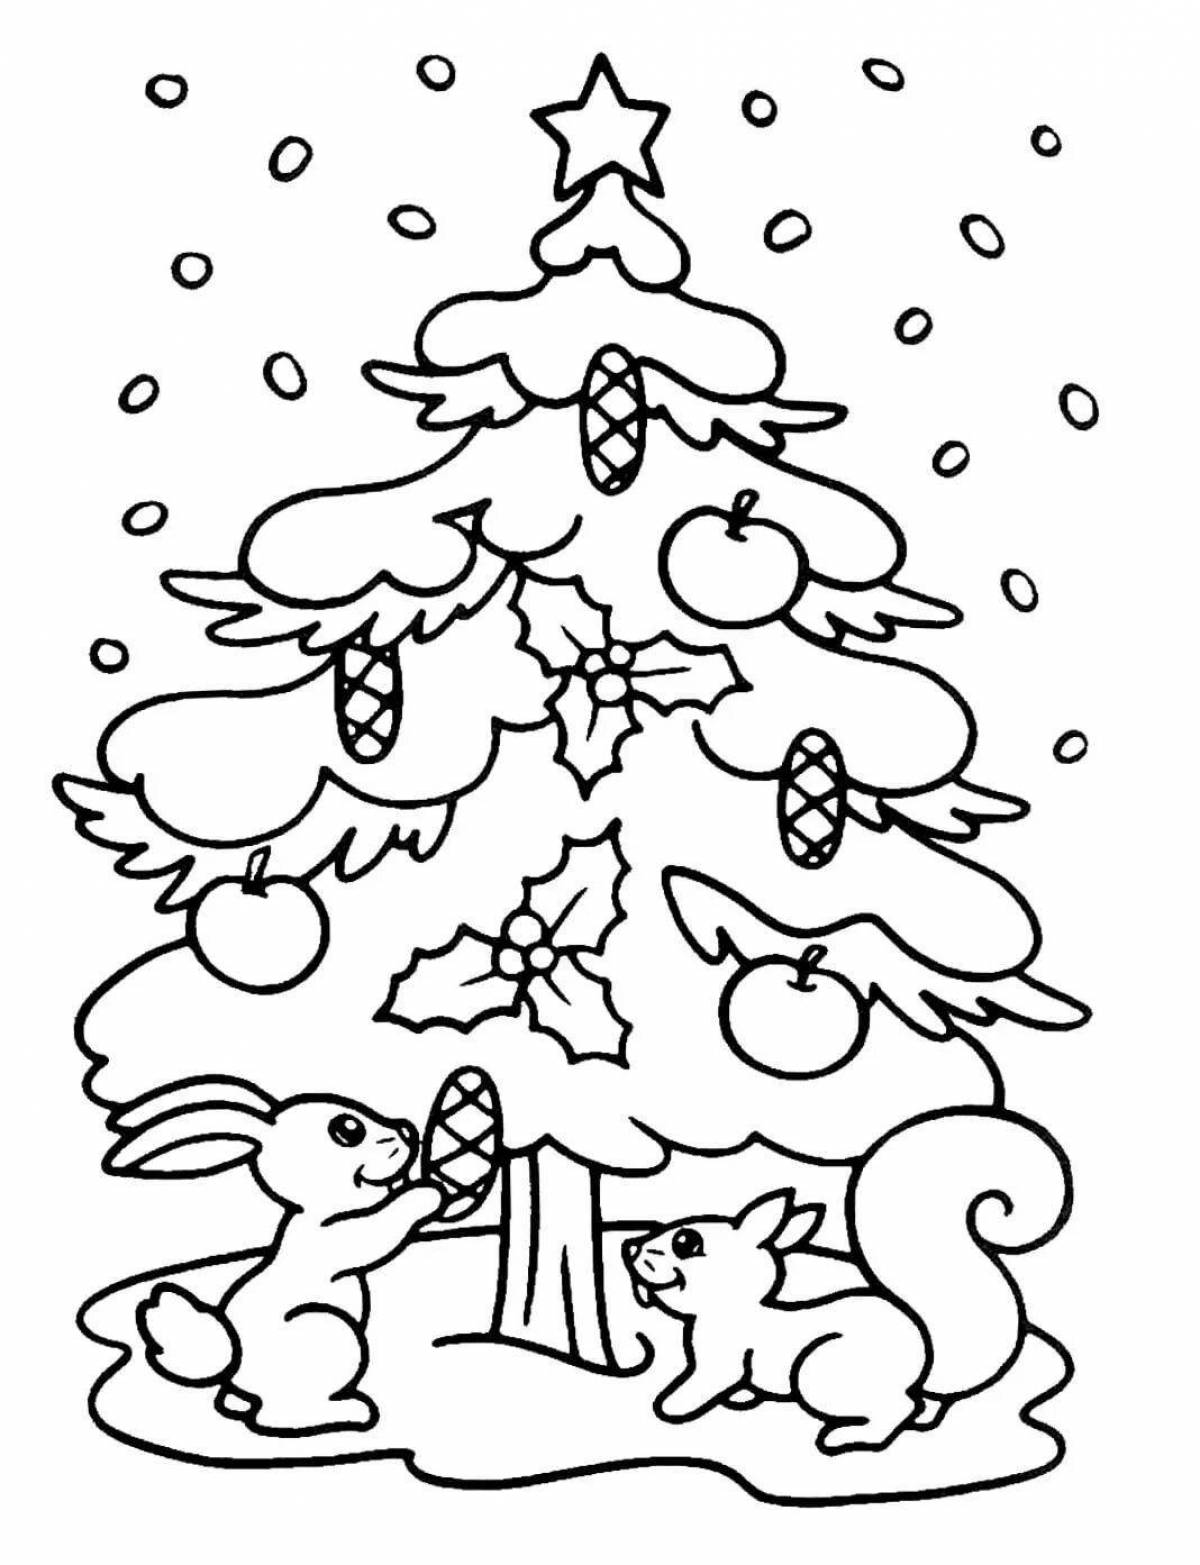 Fabulous Christmas tree coloring page